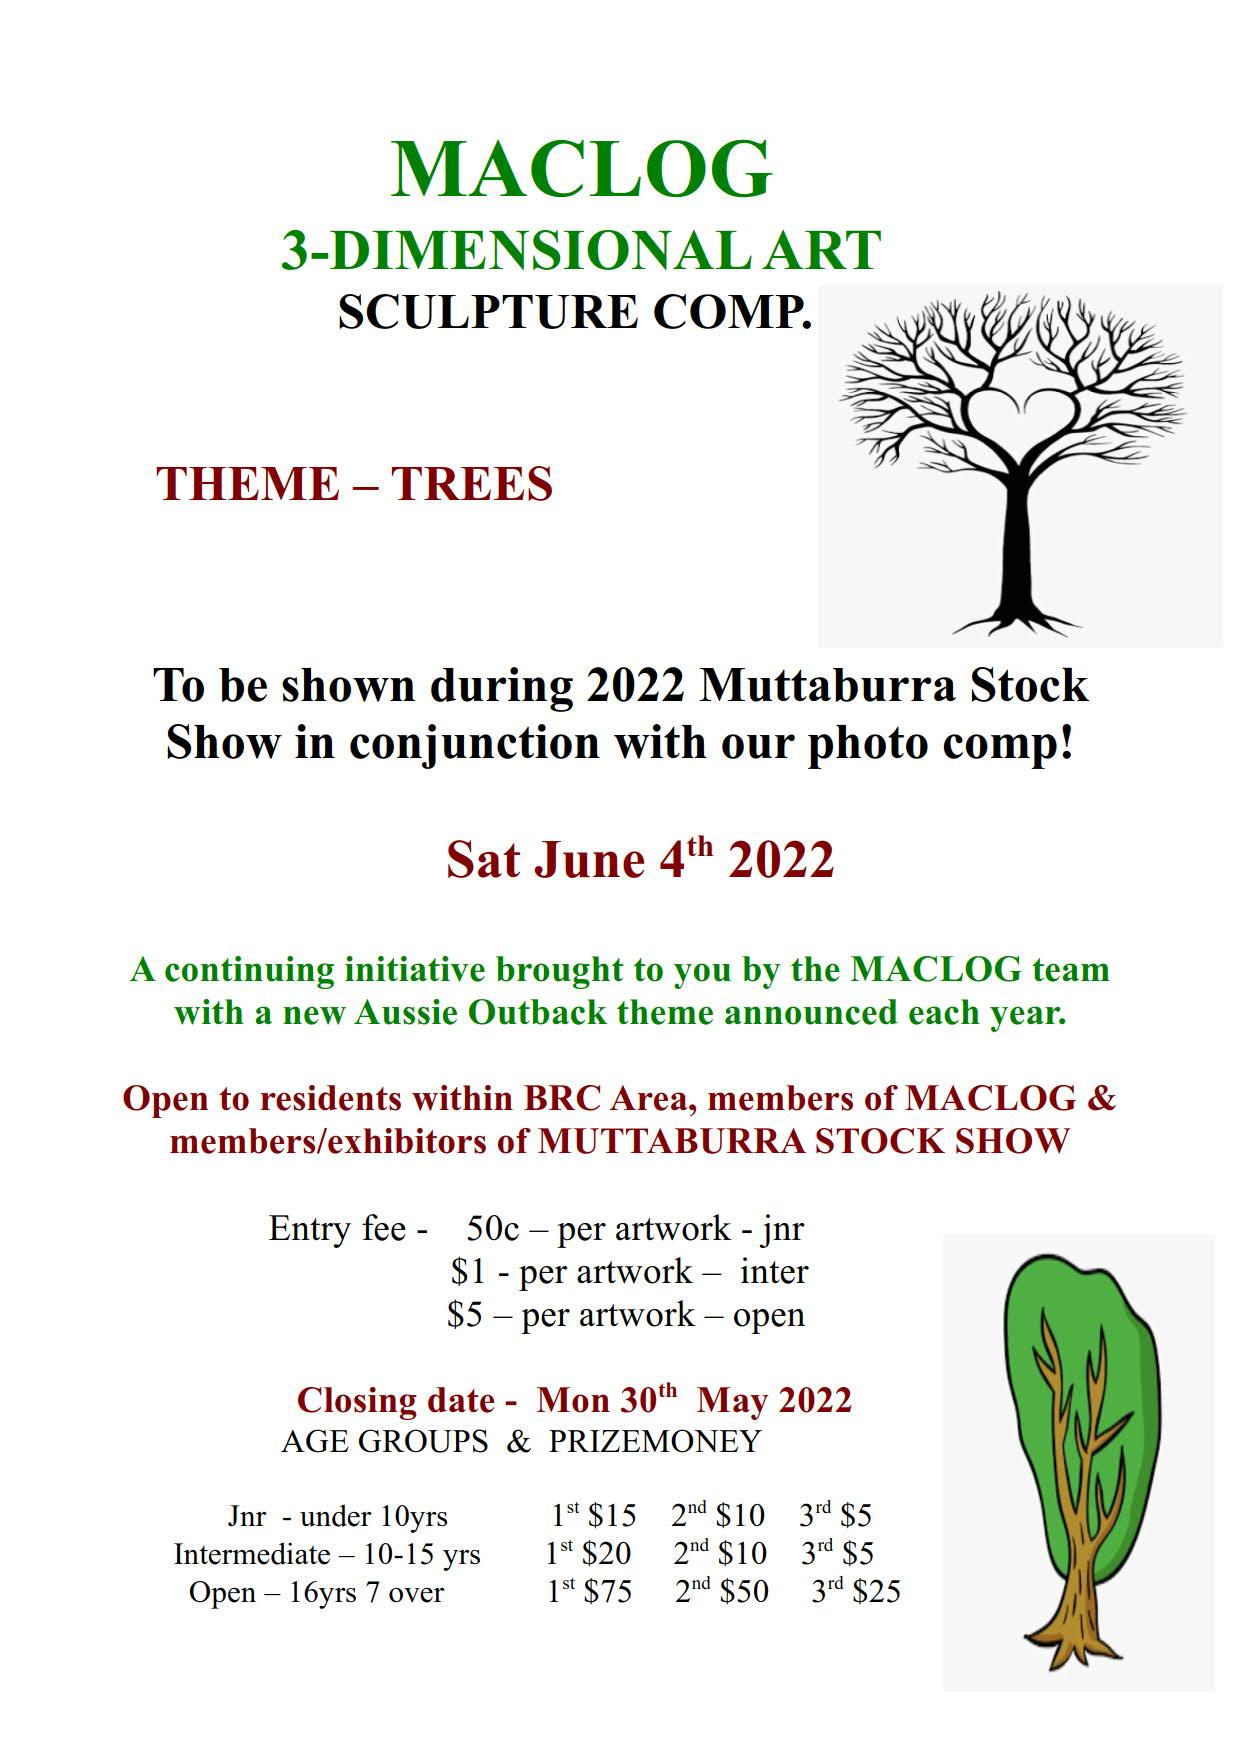 MACLOG 3 dimensional art competition, Saturday 4 June 2022 Muttaburra Stock Show 1